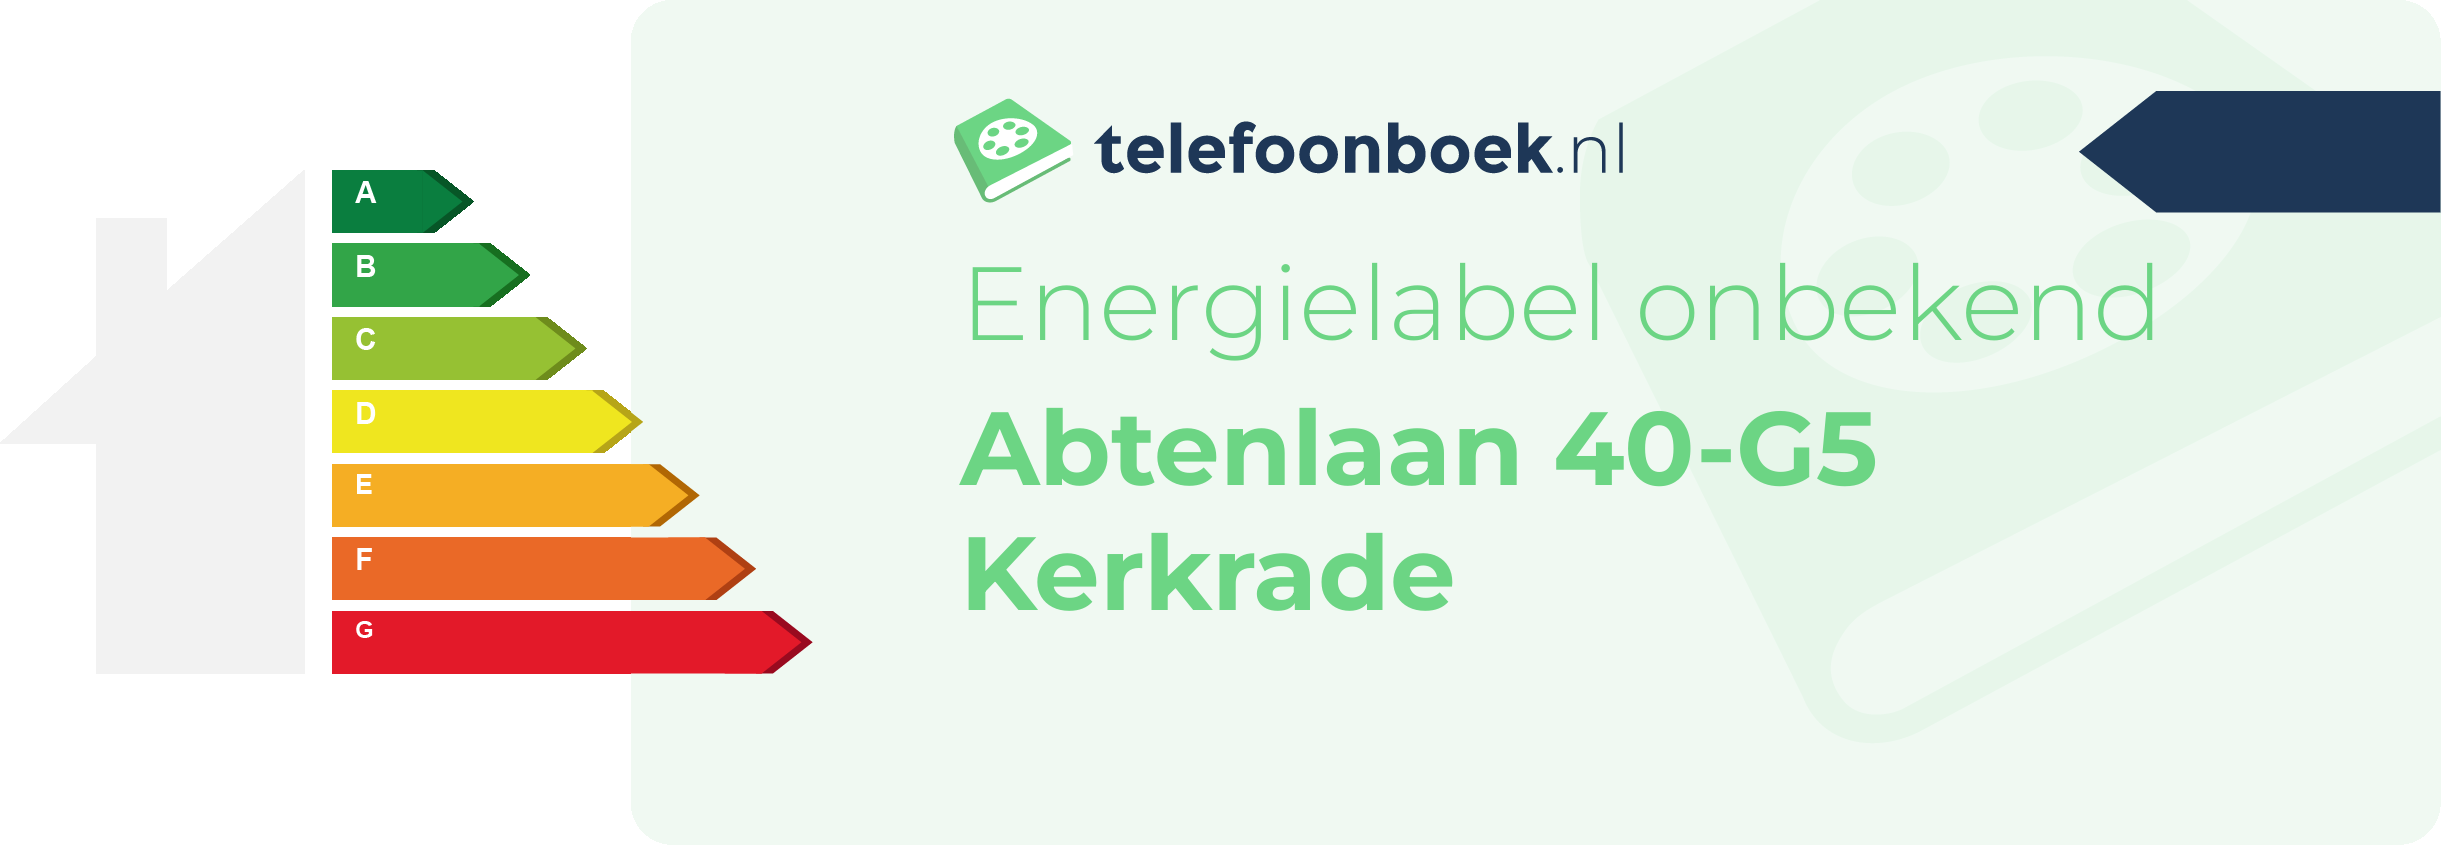 Energielabel Abtenlaan 40-G5 Kerkrade